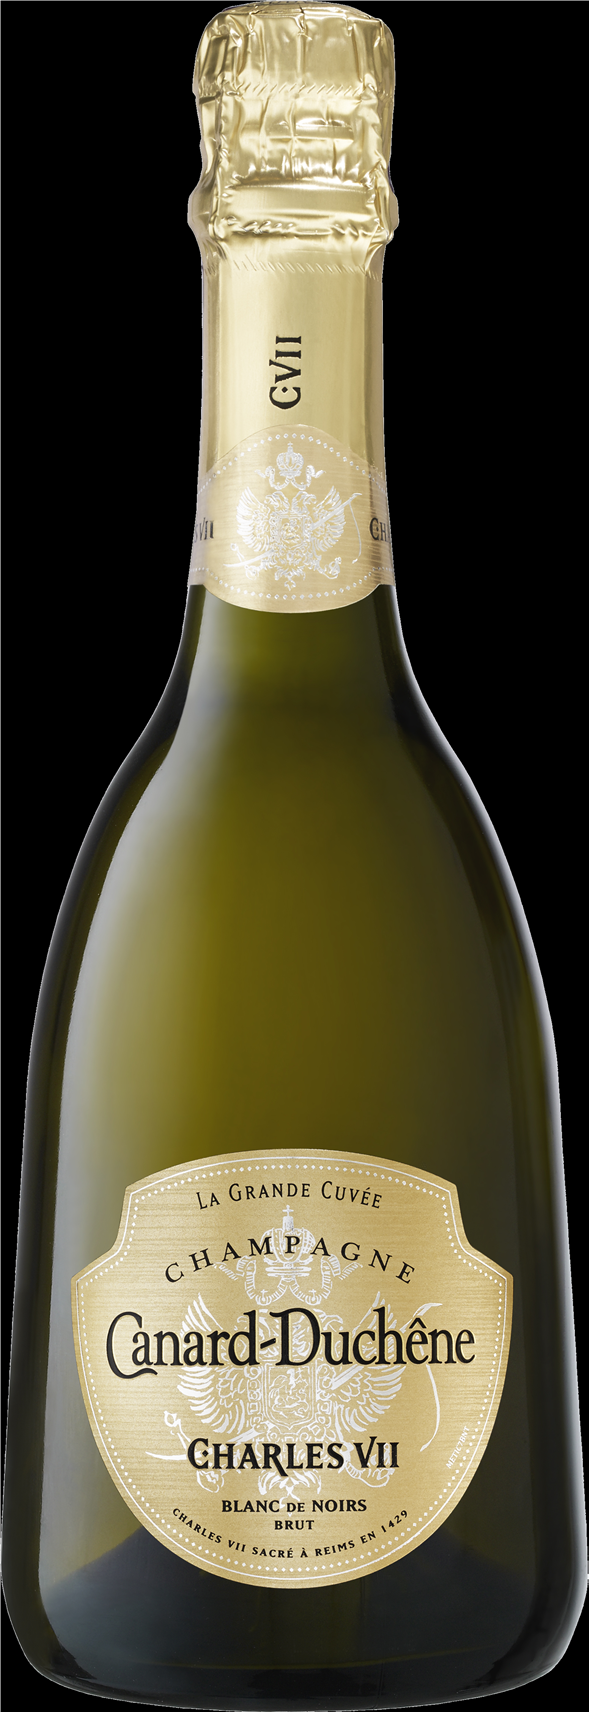 Canard-Duchene Charles VI  Blanc de Noirs, Champagne Frankrig